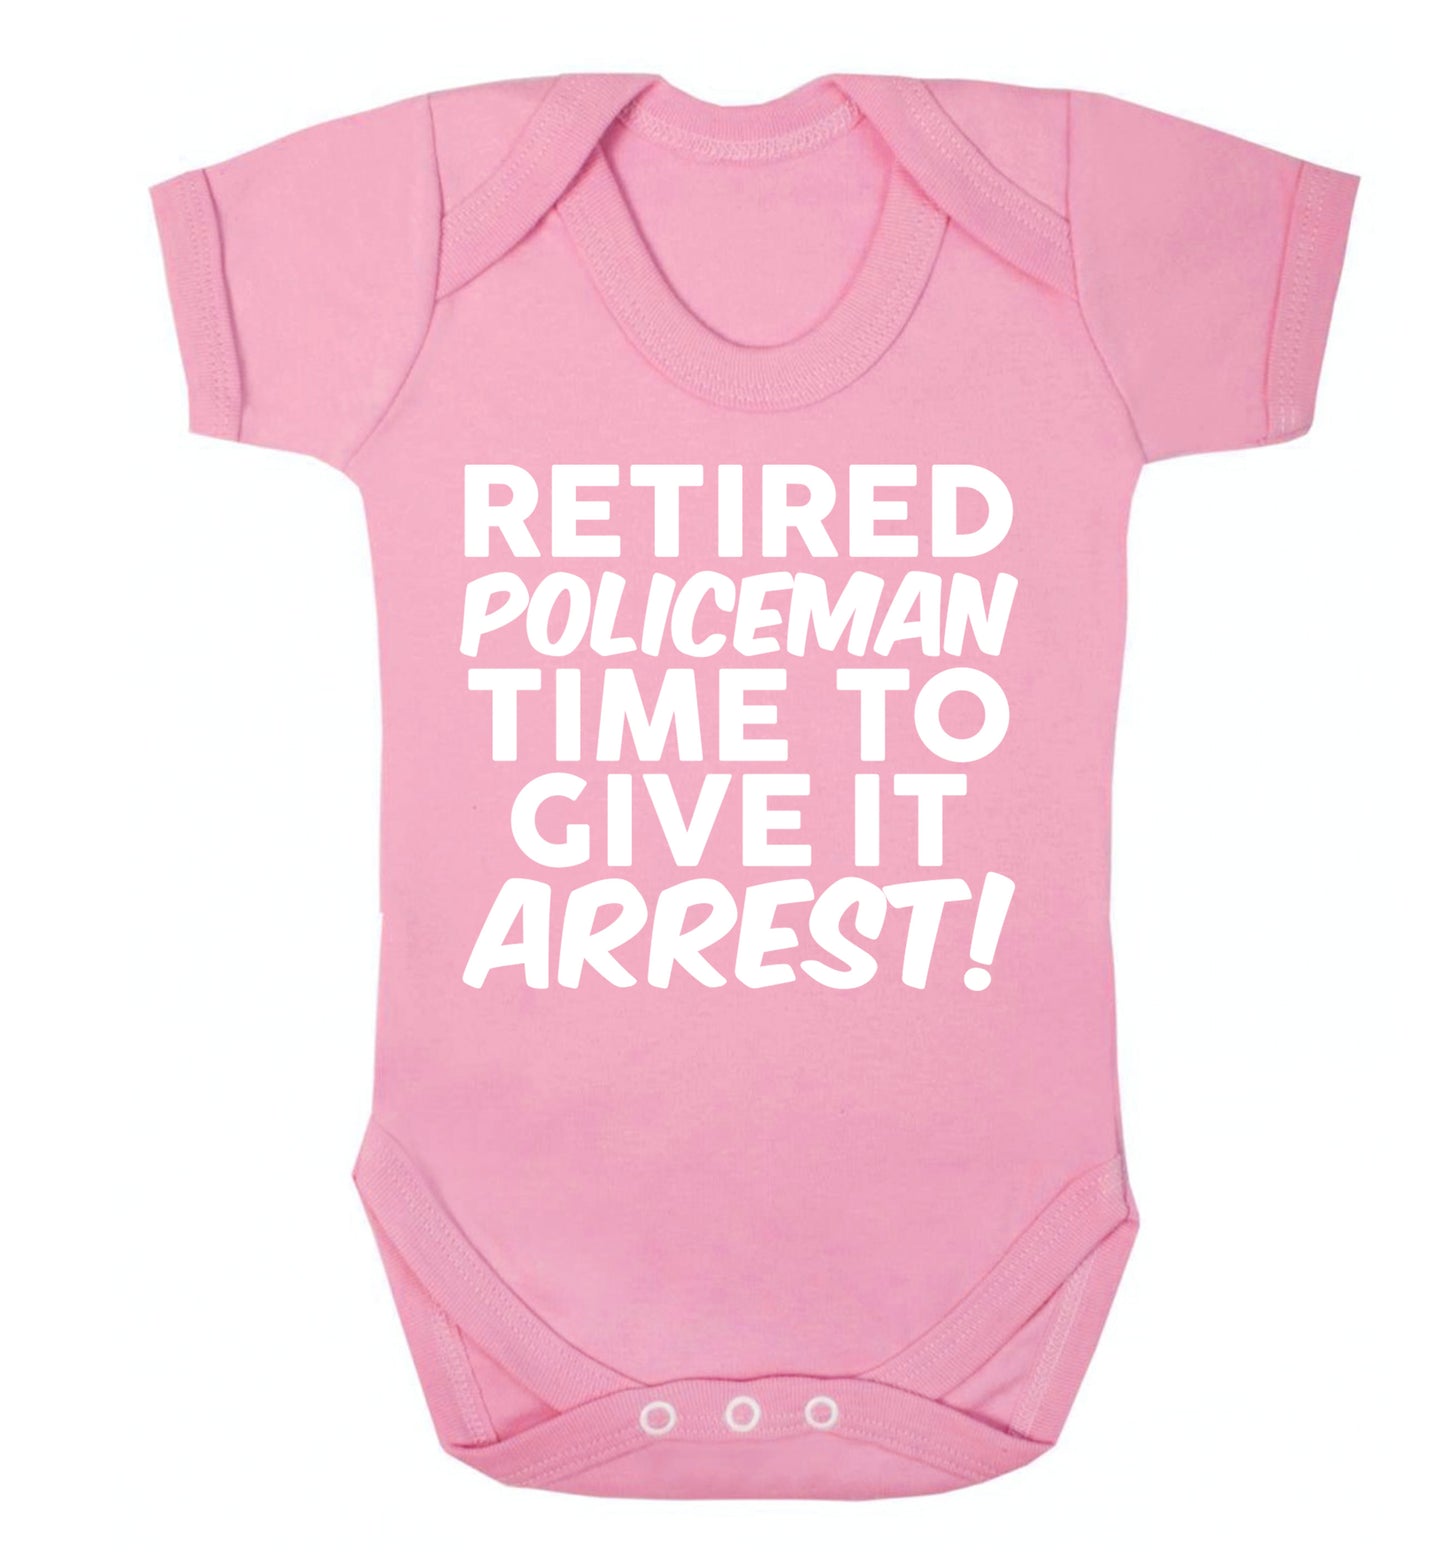 Retired policeman give it arresst! Baby Vest pale pink 18-24 months